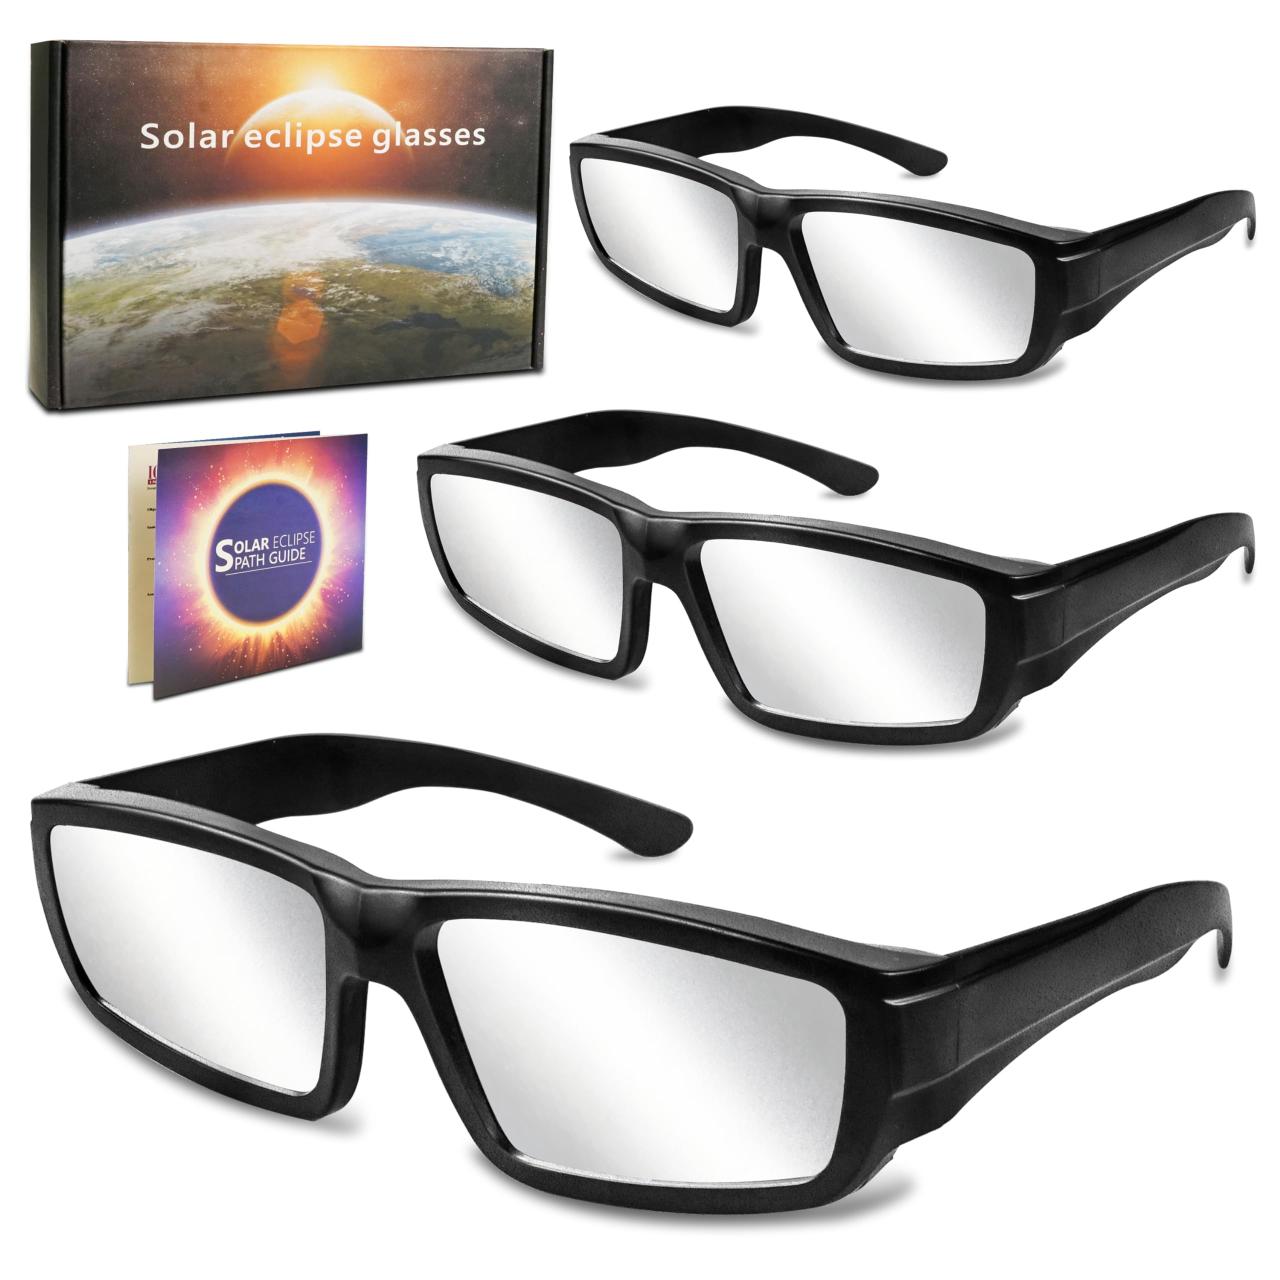 Keyaluo Solar Eclipse Glasses